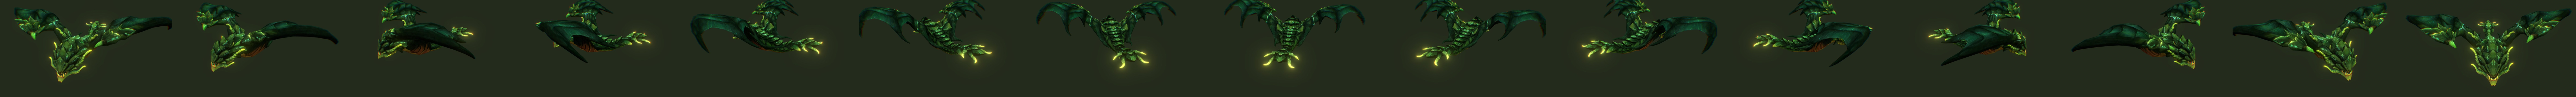 Azurewrath - Dota 2 Vengeful Spirit set - 3D model by vlad_icobet